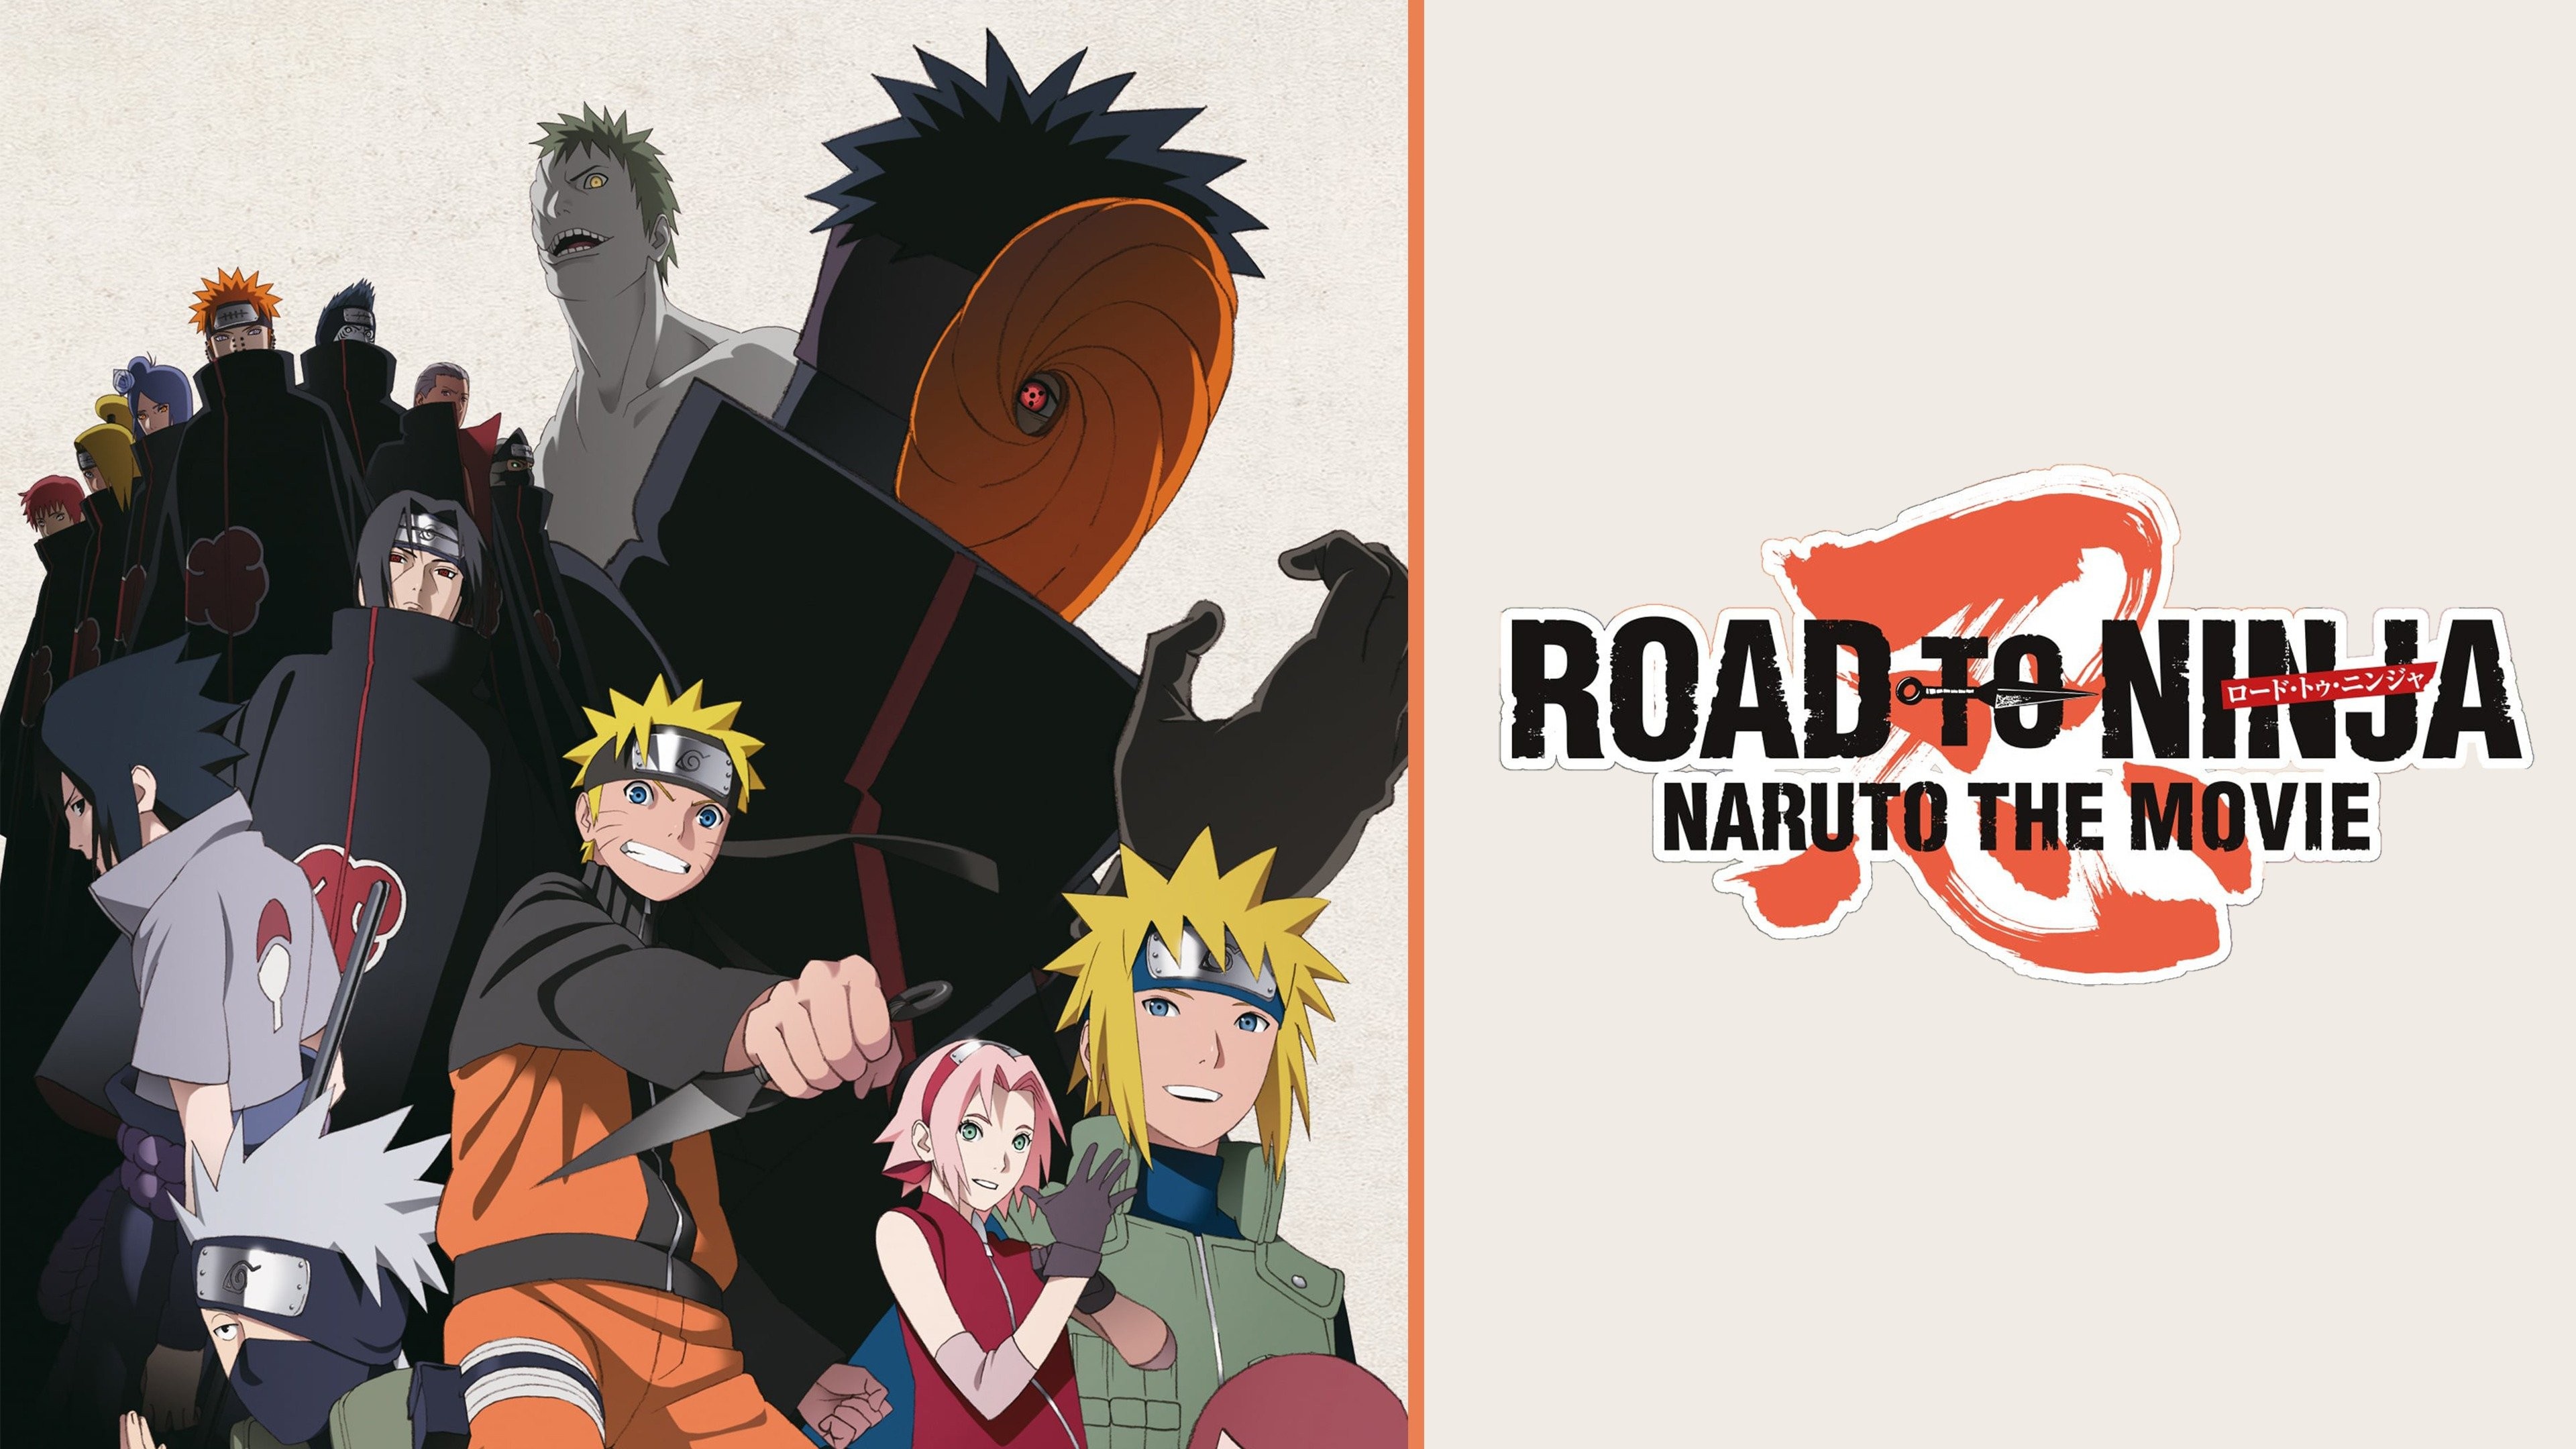 Where to watch Road to Ninja: Naruto the Movie